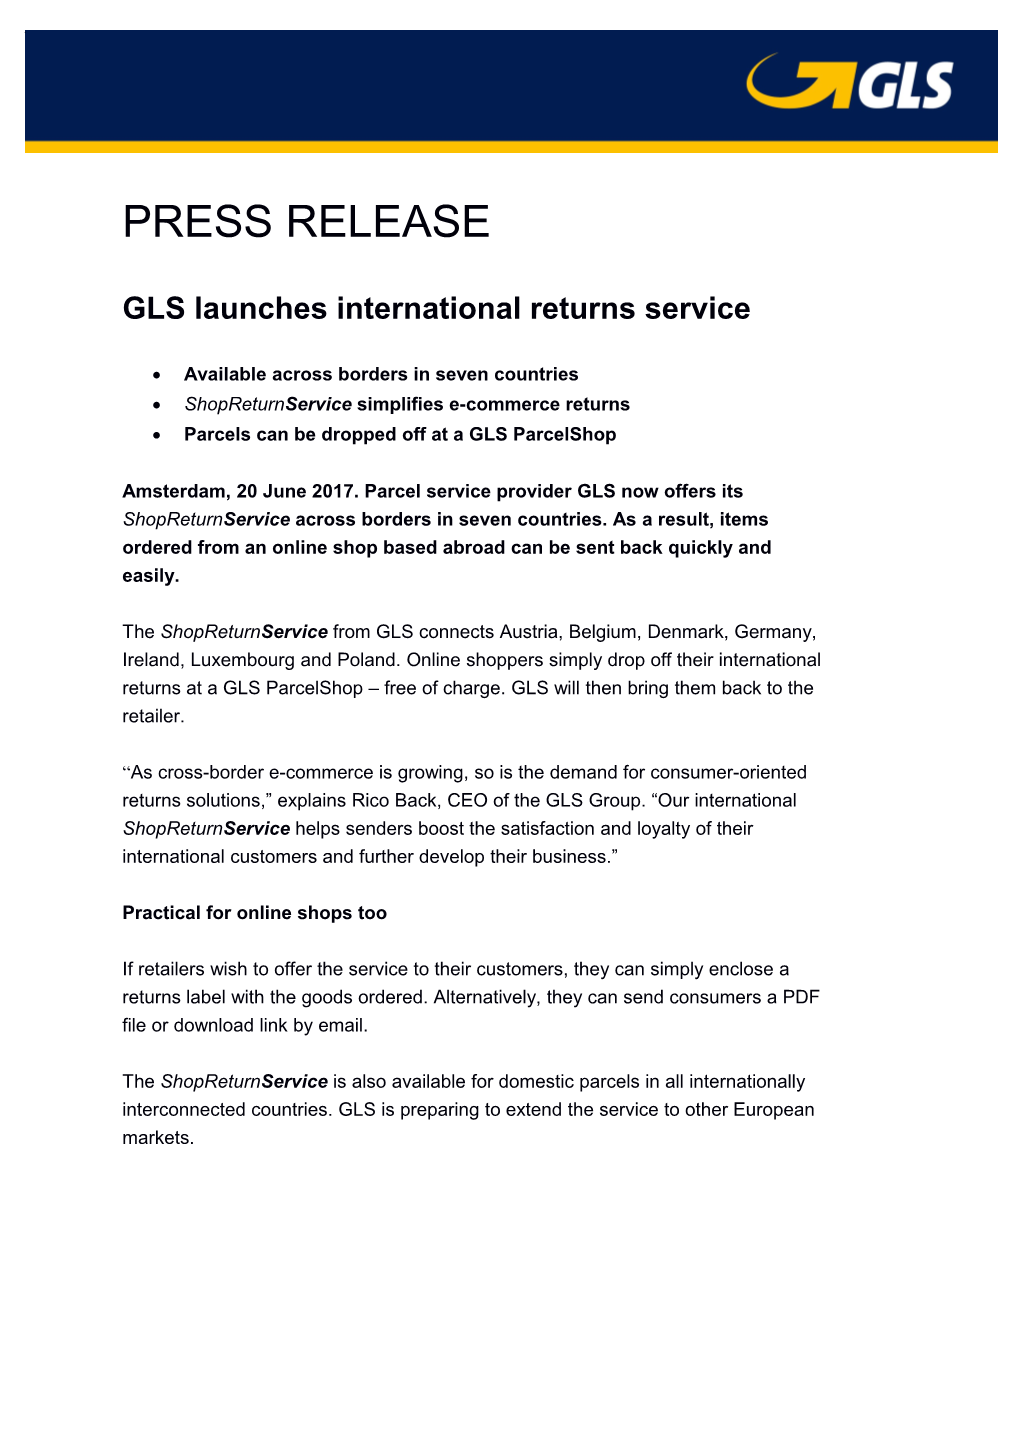 GLS Launches International Returns Service